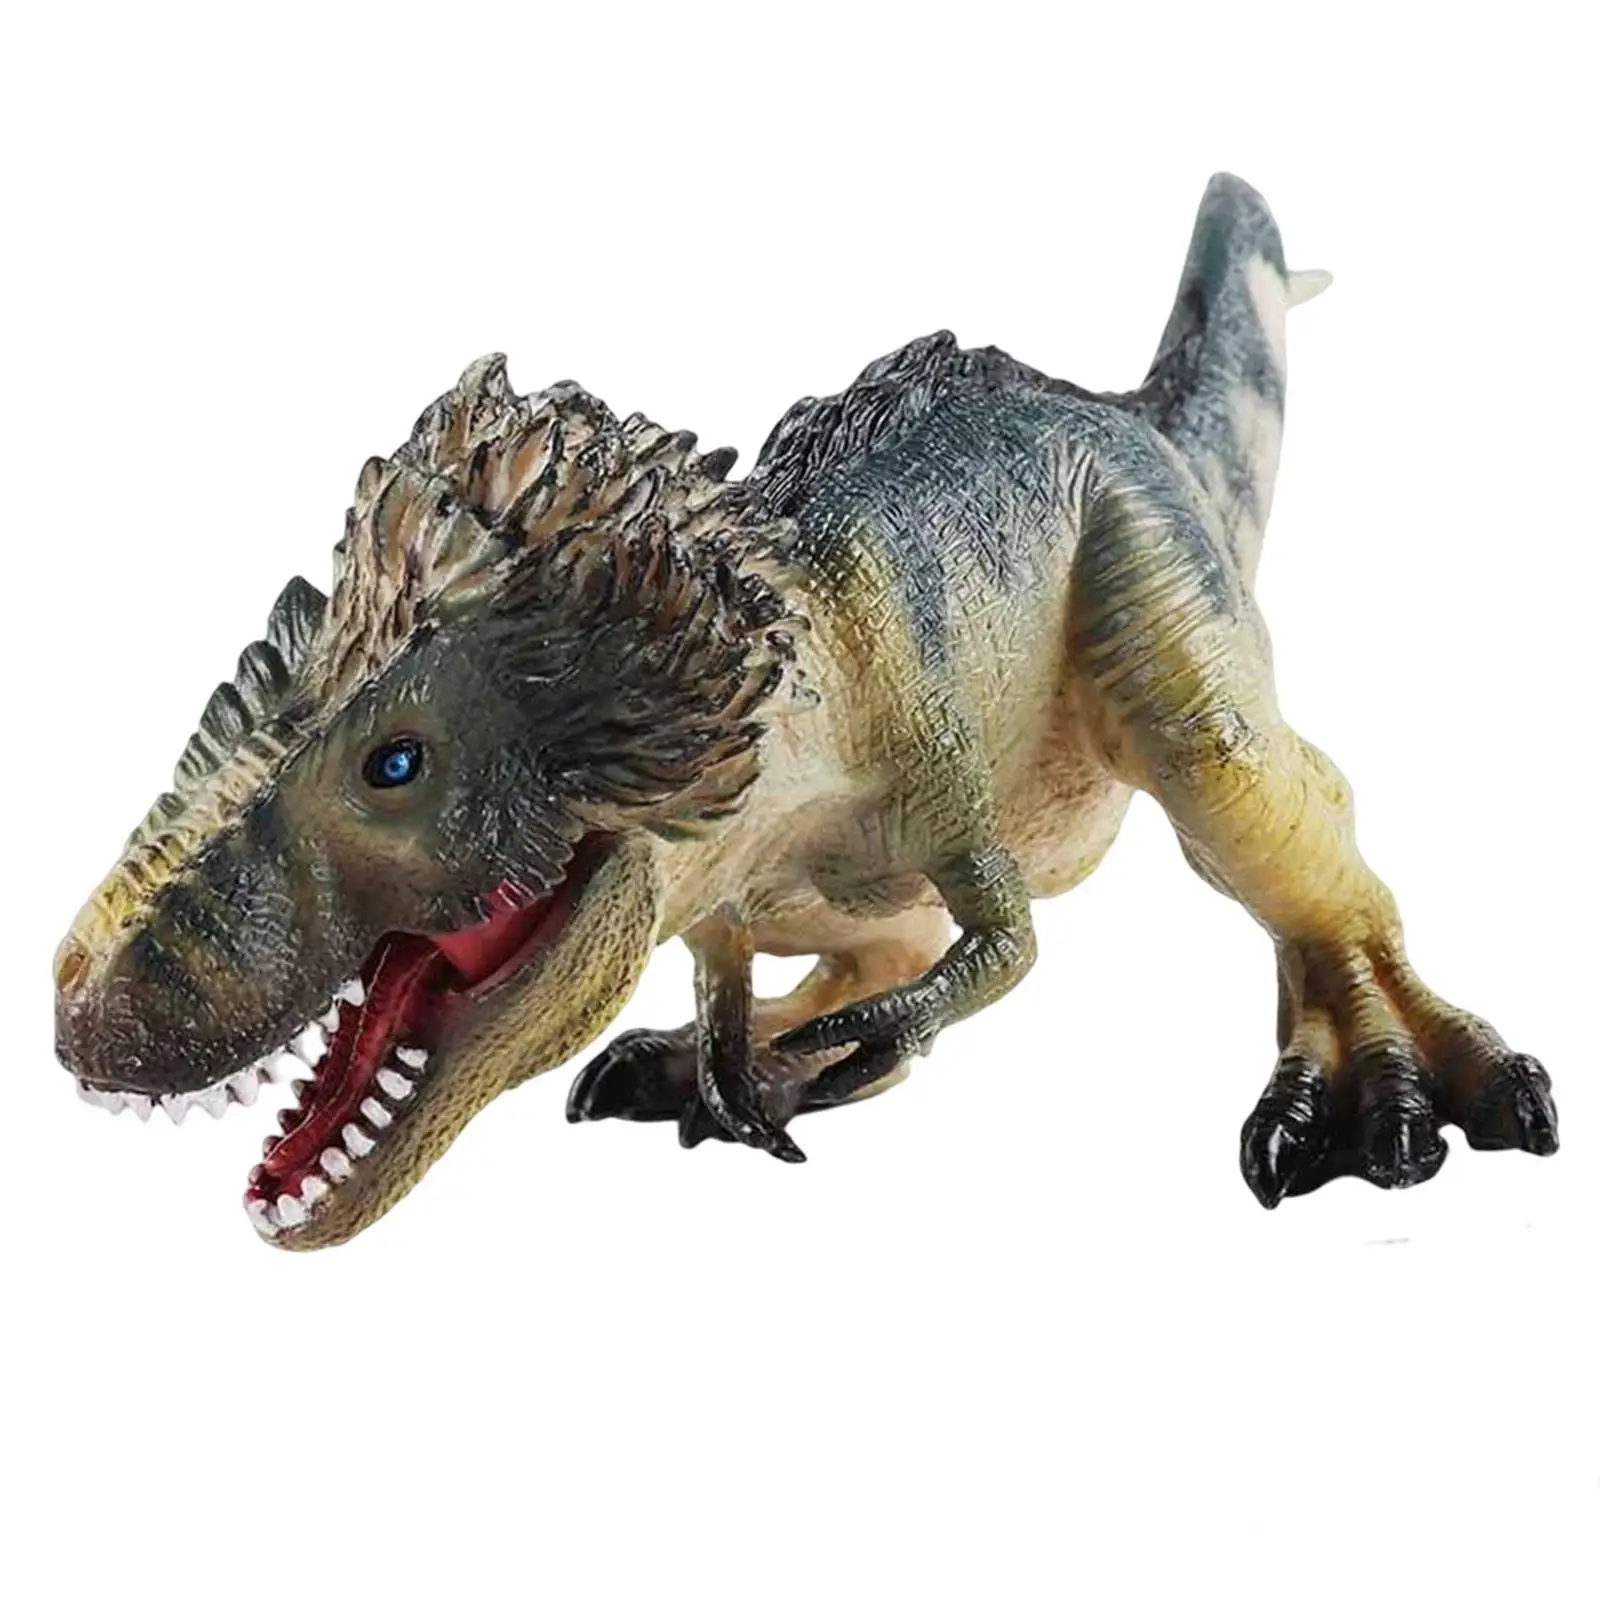 Tyrannosaurus Action Figurine Prehistoric Animals Model Playset for Ornament